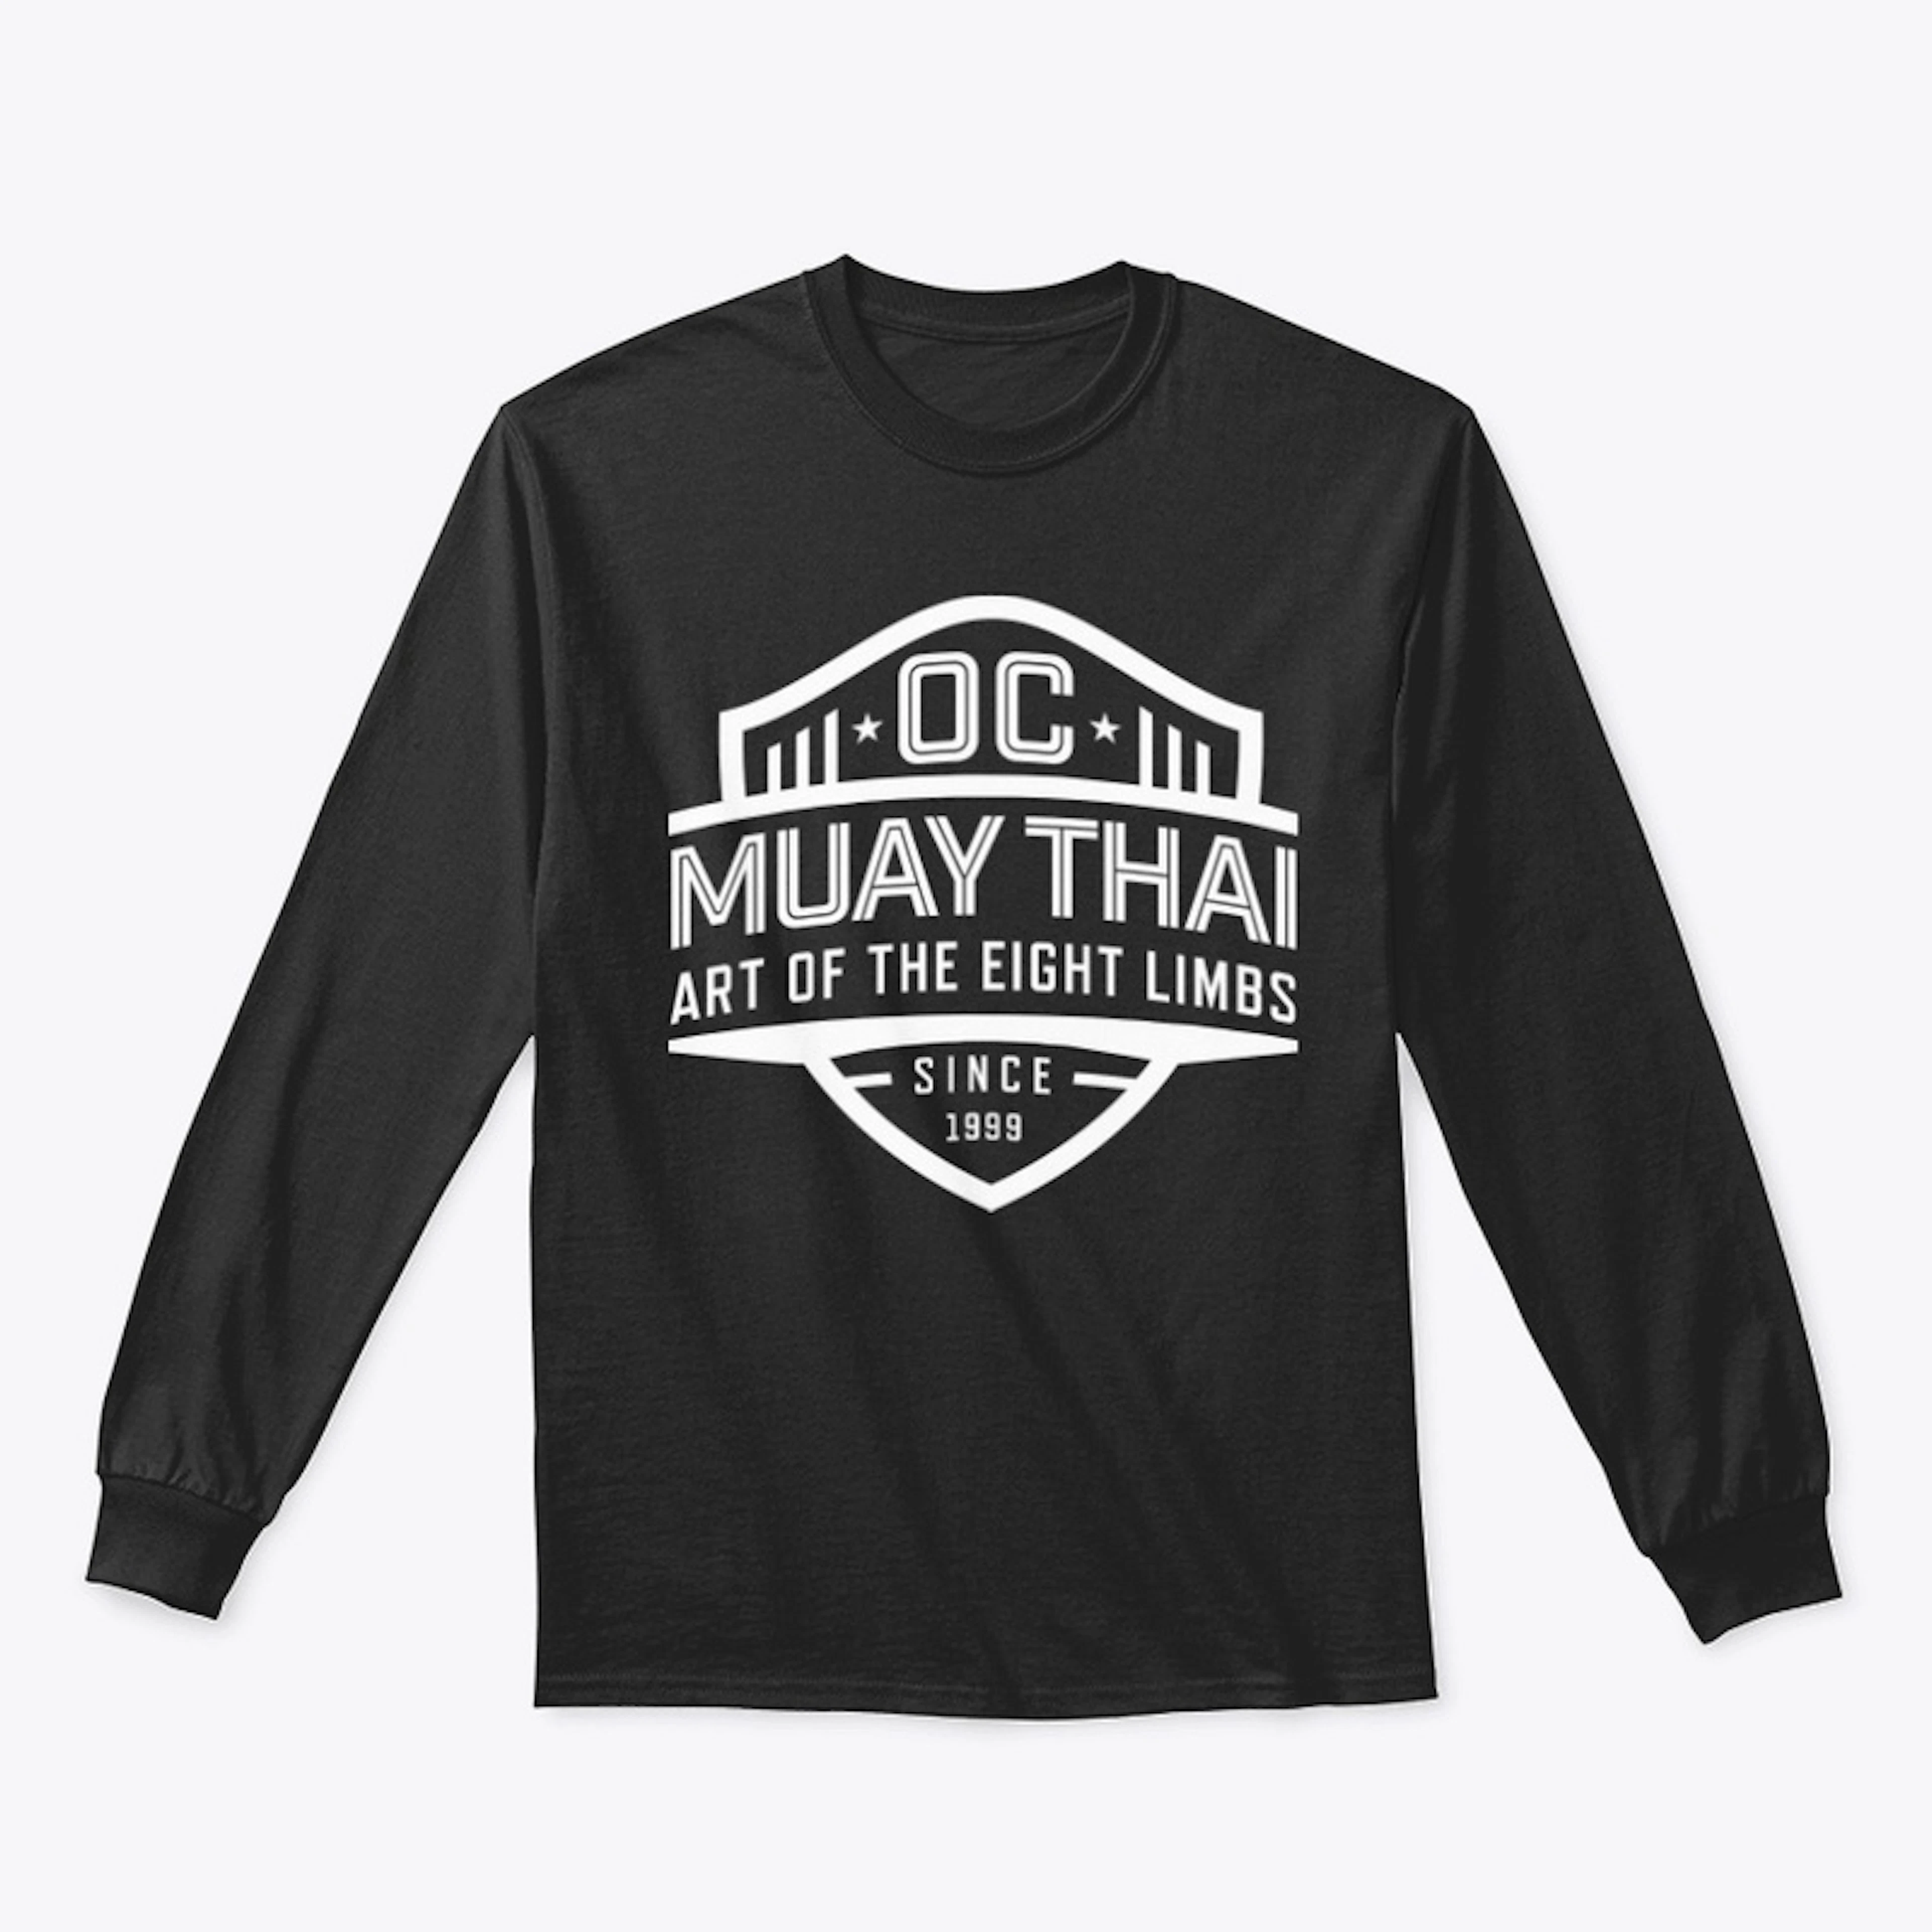 Muay Thai - Art of the 8 Limbs T-Shirts